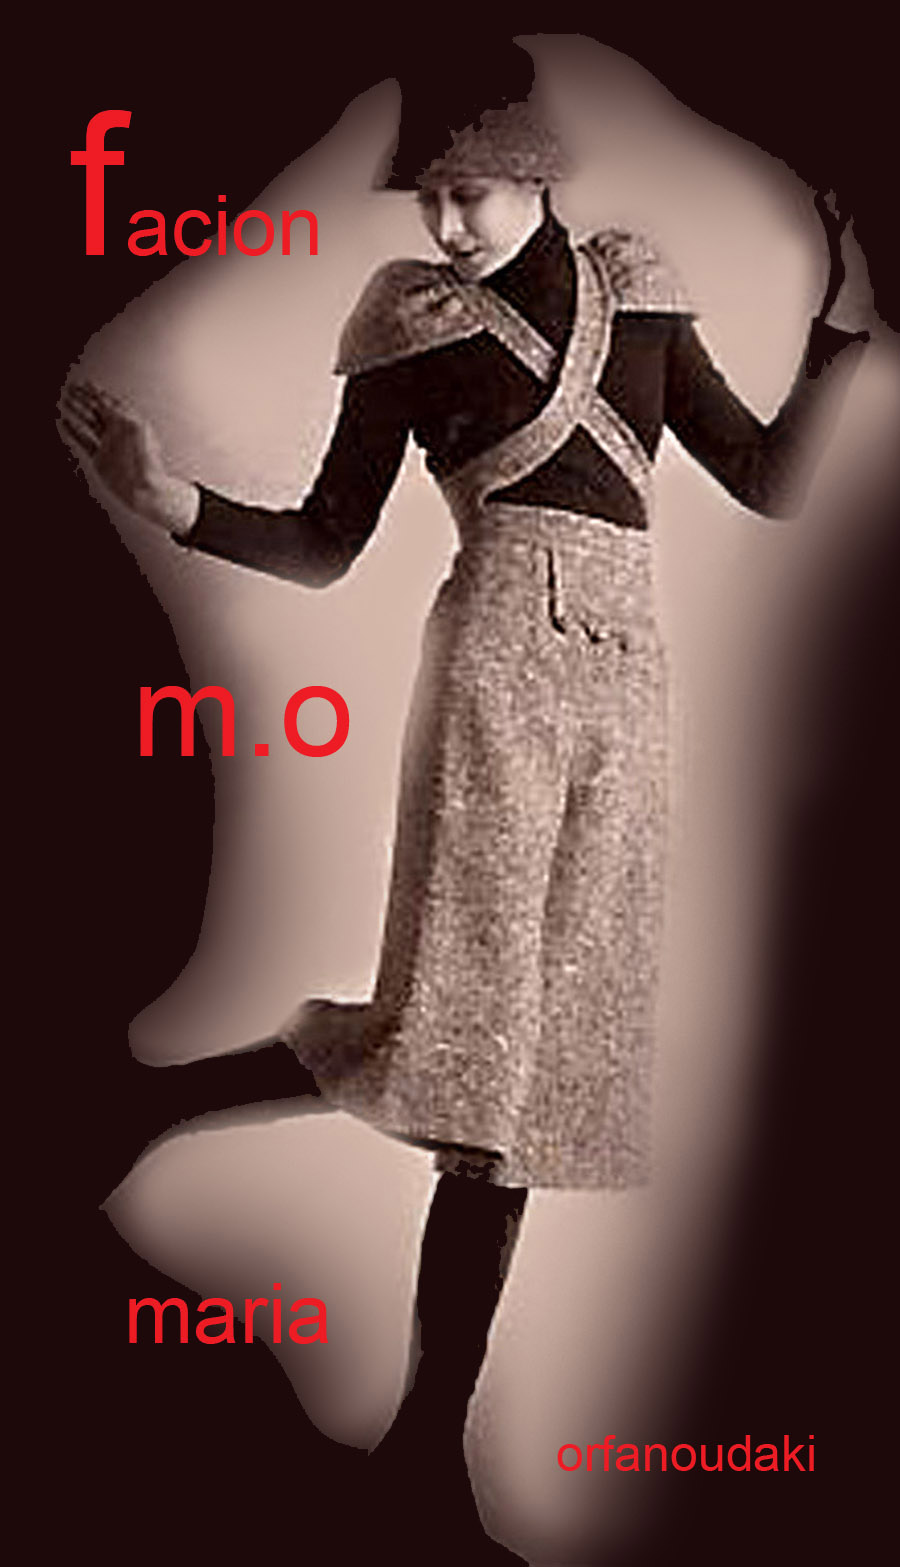 fashion-mode-maria-orfanoudaki-mo-66